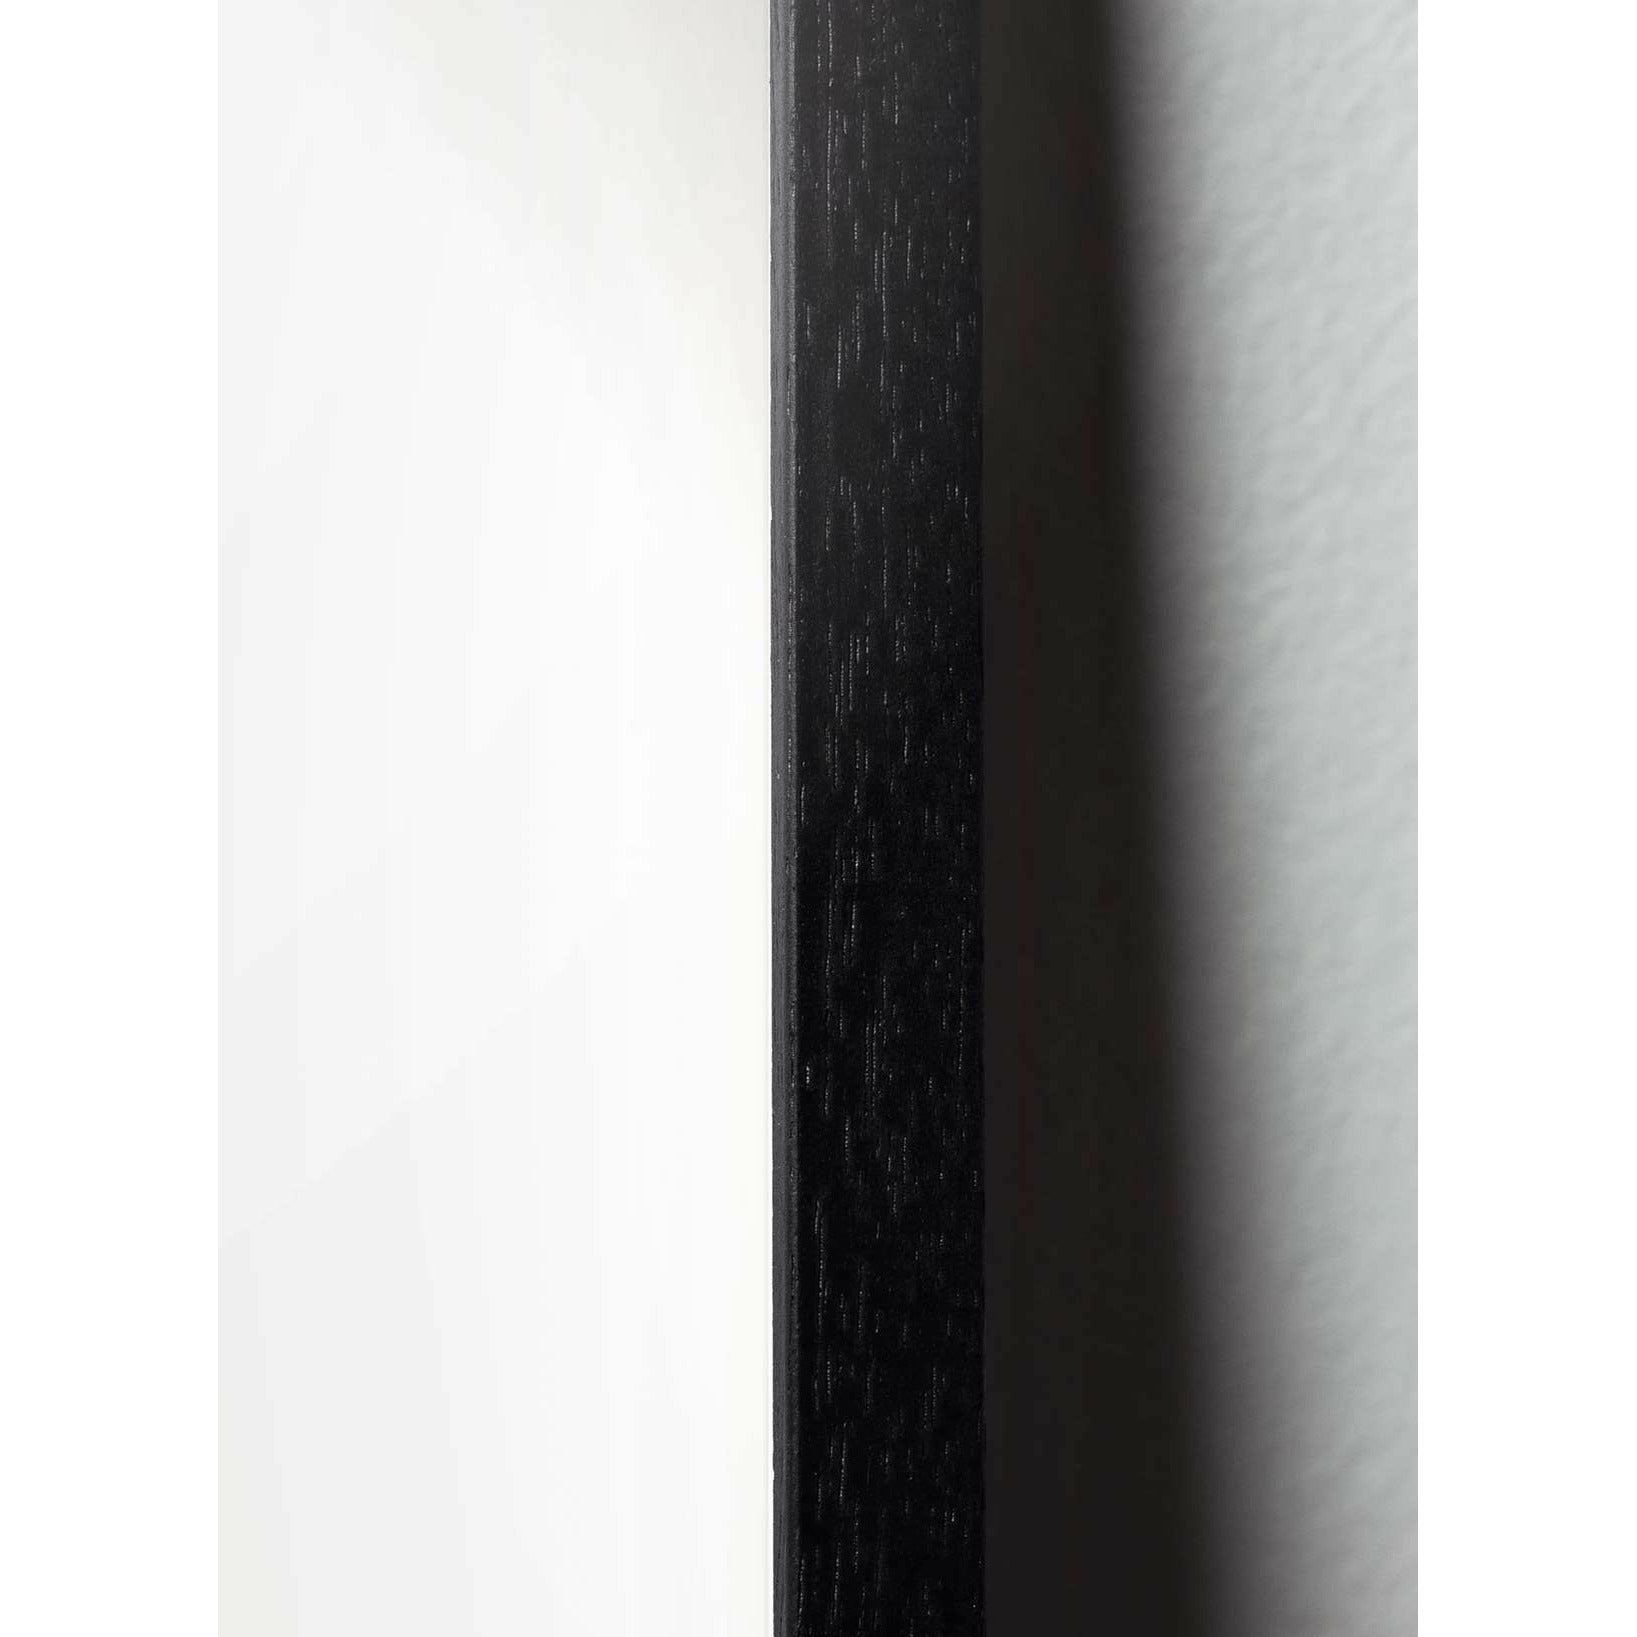 Brainchild Flowerpot Classic -affisch, ram i svart -målat trä 30x40 cm, svart bakgrund